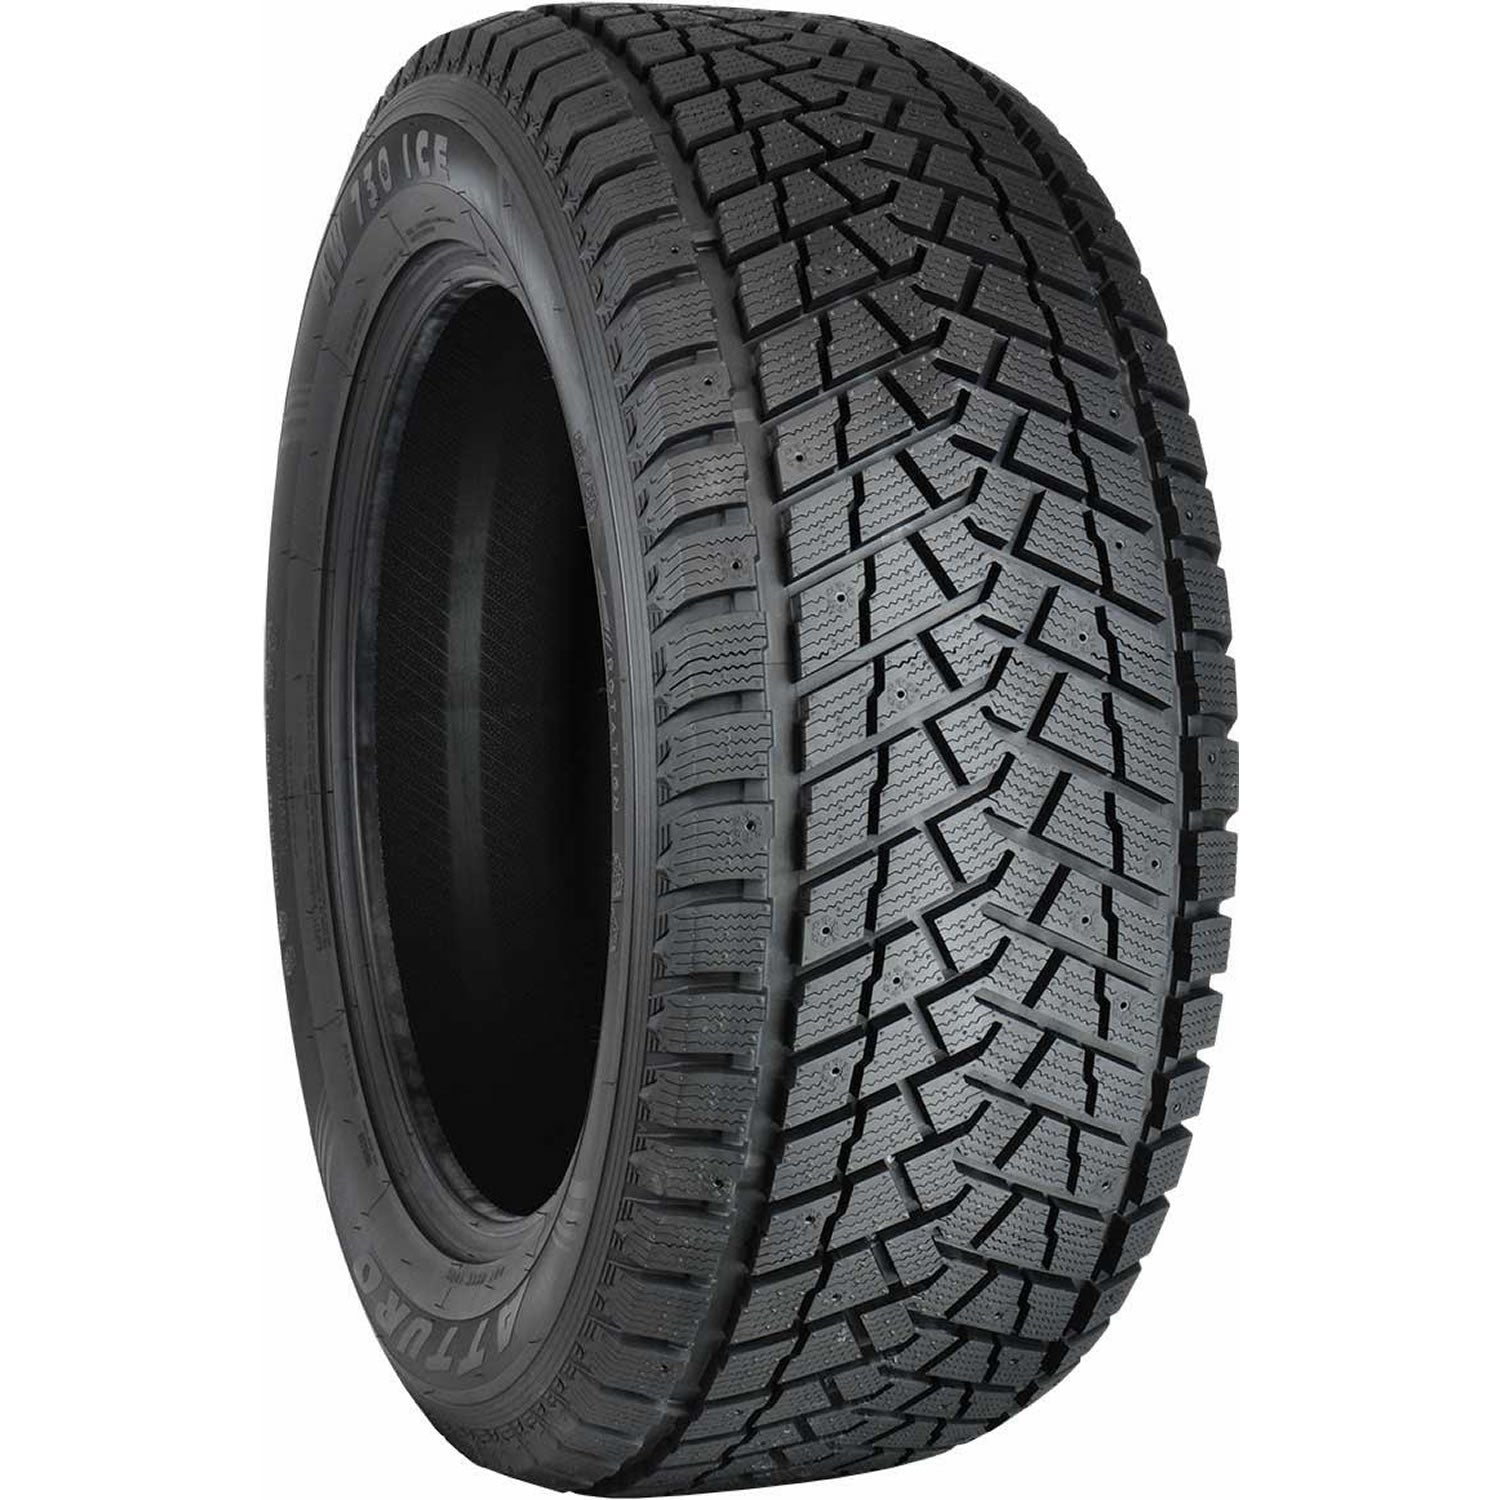 ATTURO AW730 ICE 285/45R19 (29.1X11.2R 19) Tires